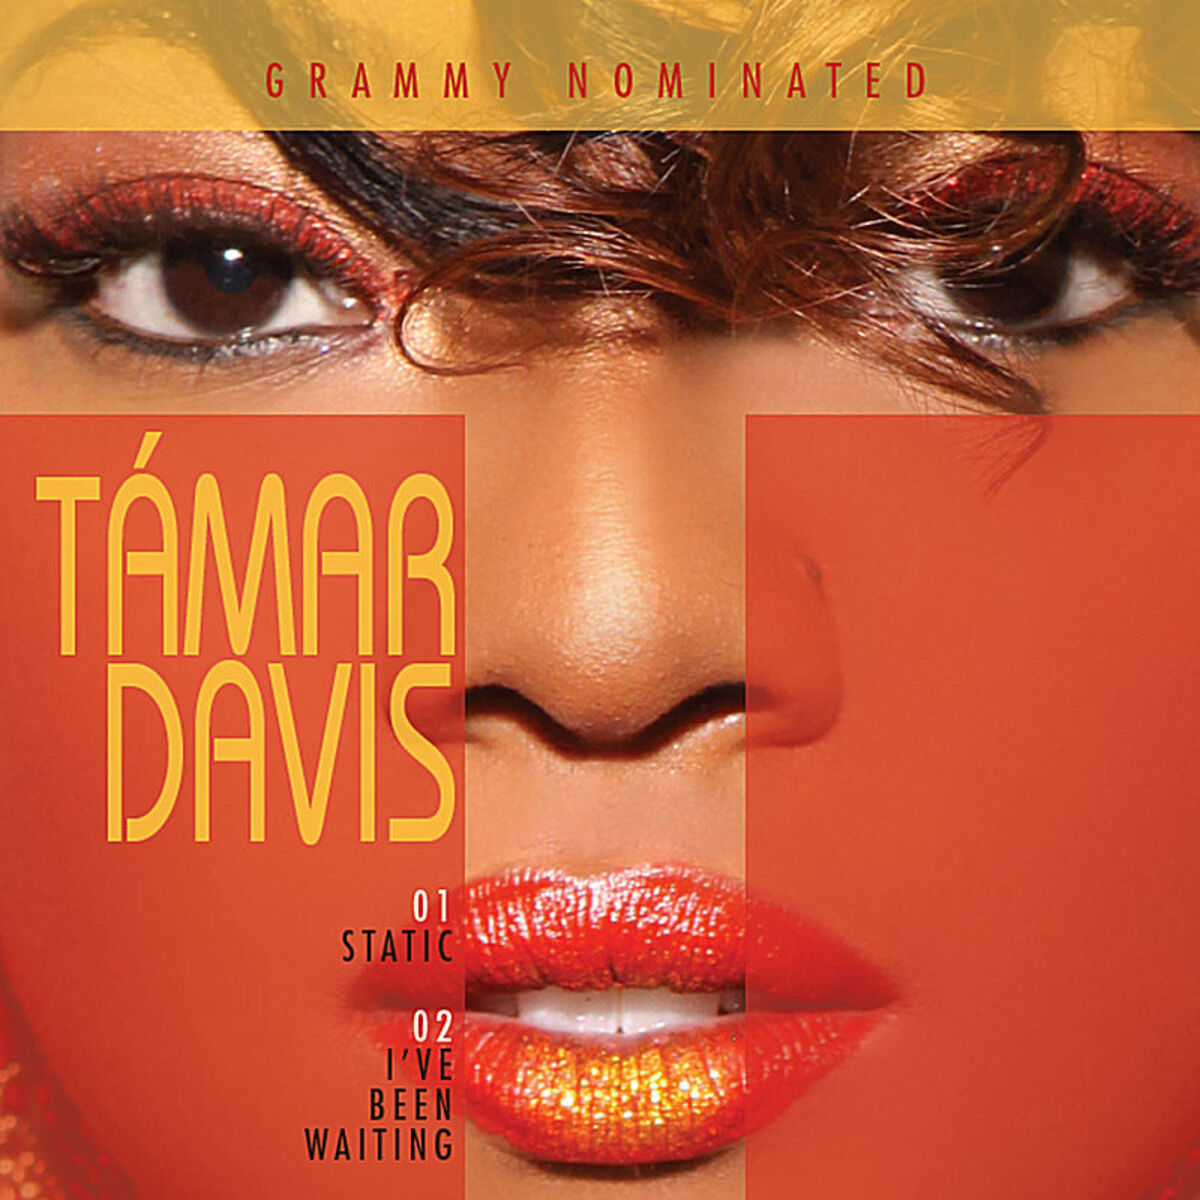 Tamar Davis: albums, songs, playlists | Listen on Deezer